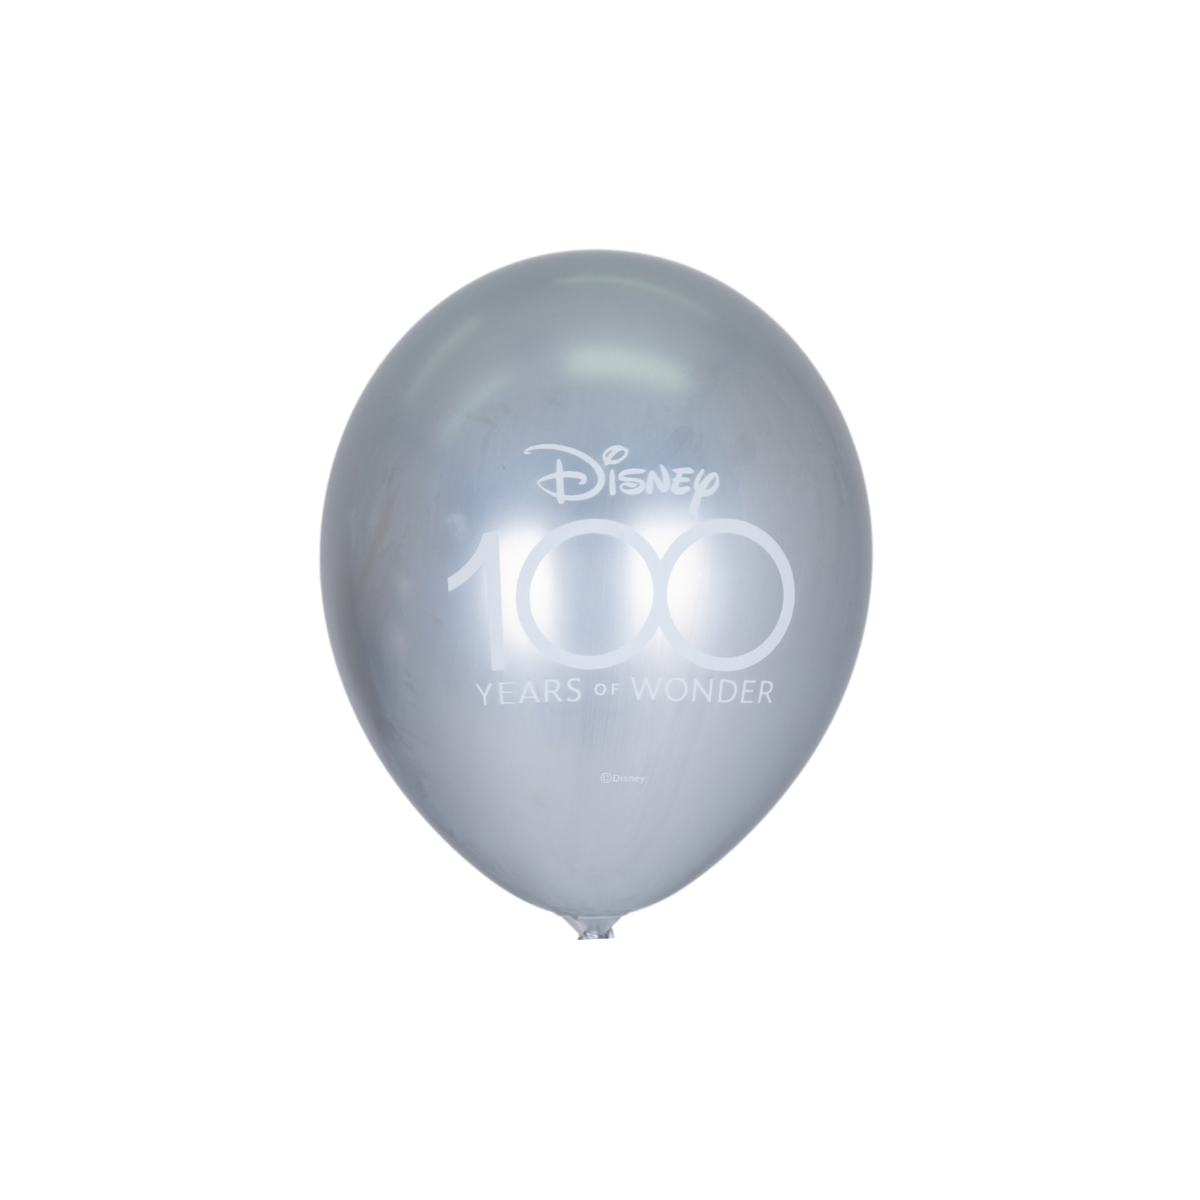 D100 Years Of Wonders Latex Balloon 11in, 6pcs